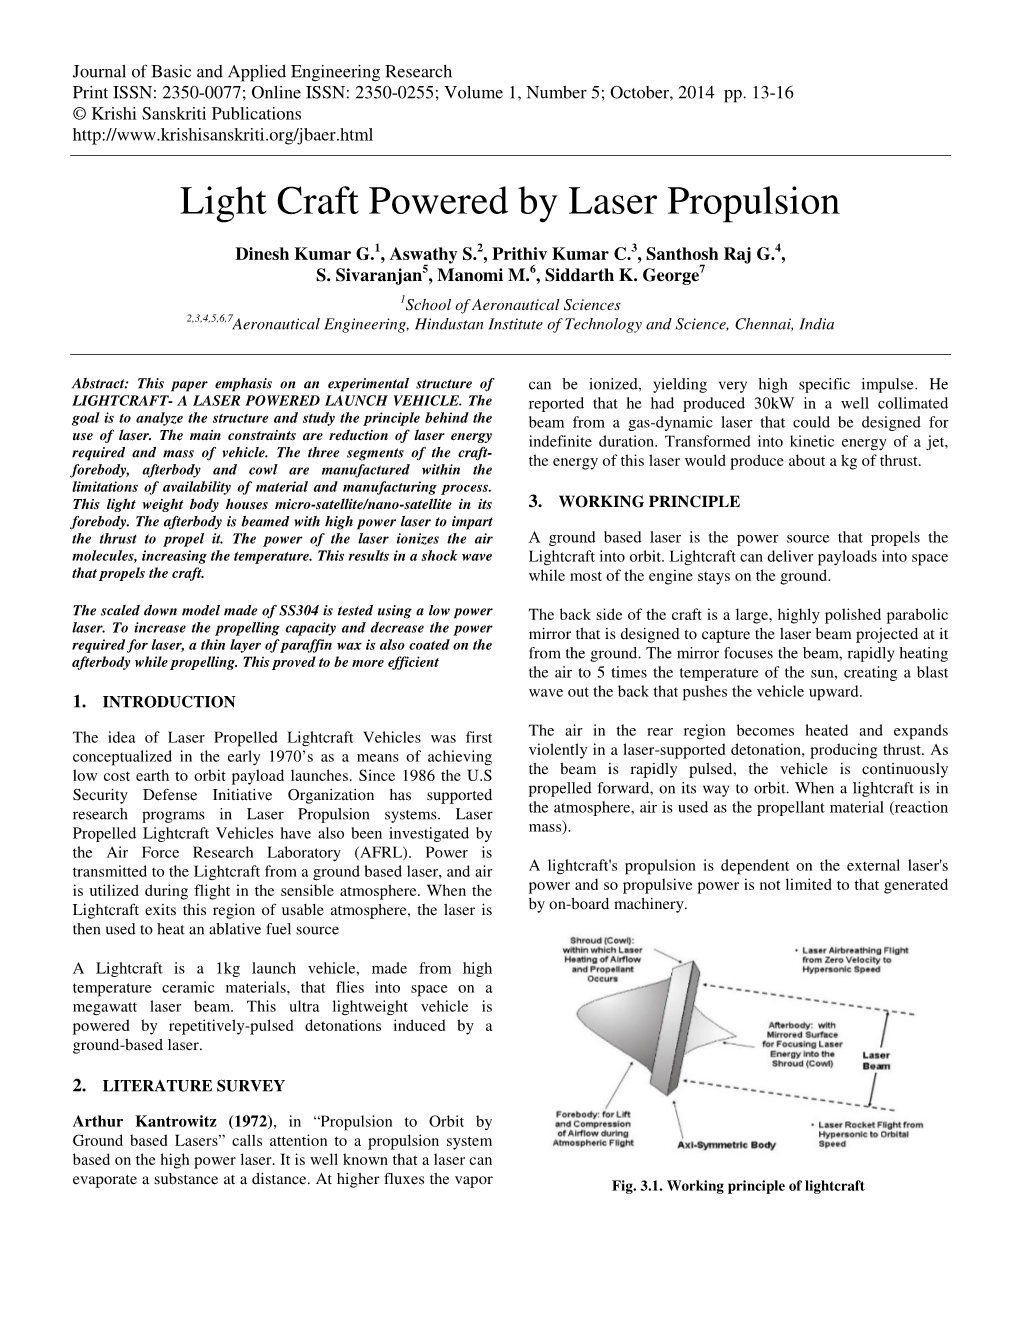 Light Craft Powered by Laser Propulsion